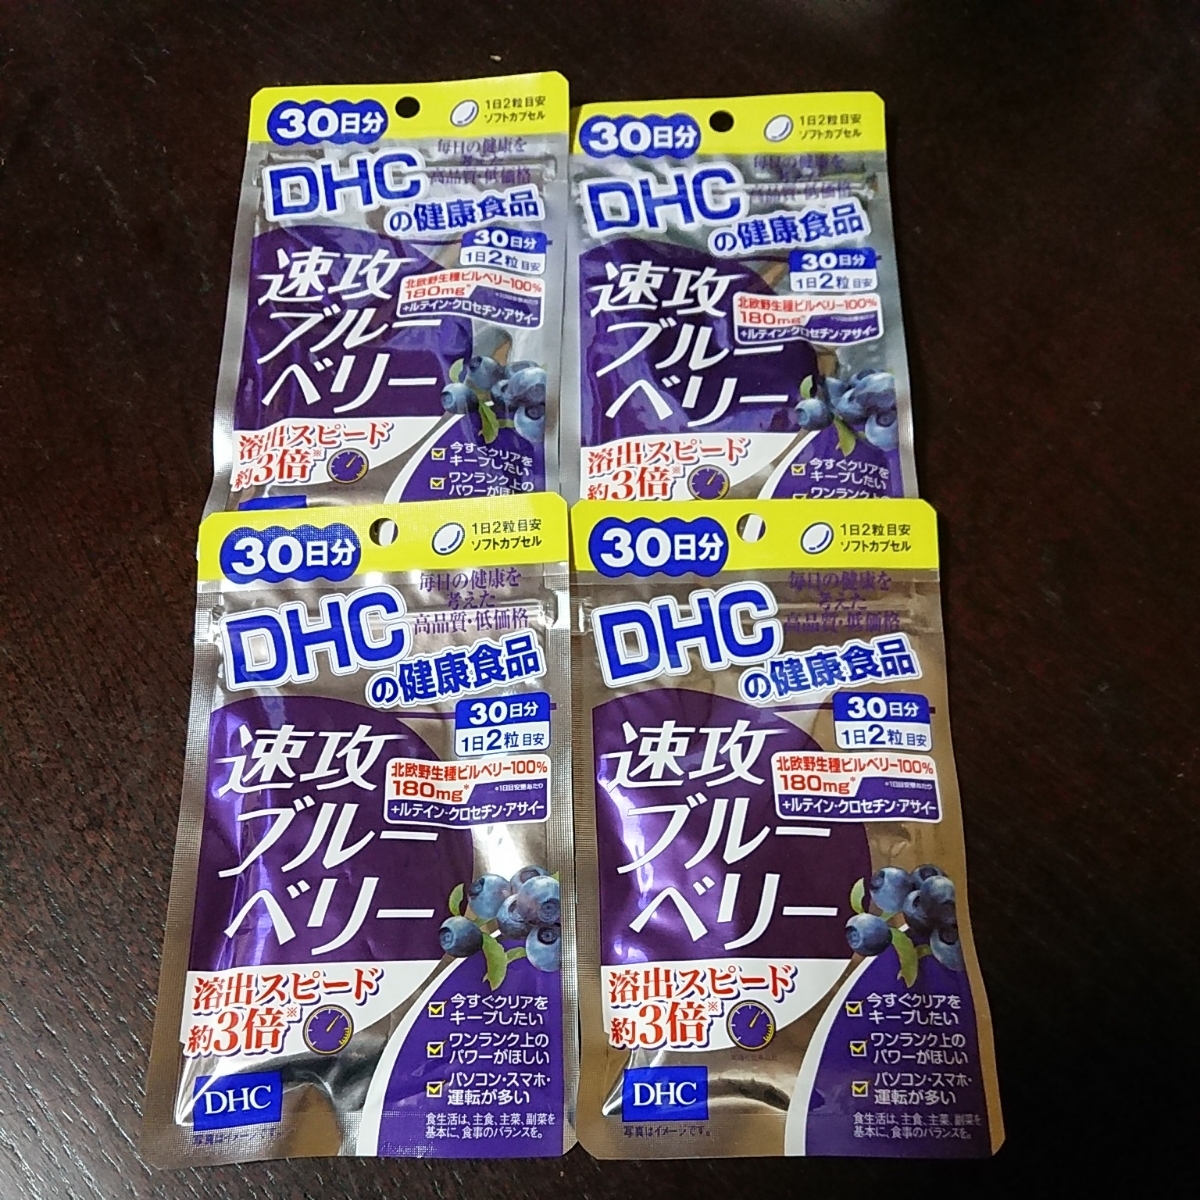 Dhc ブルーベリー サプリメント 4袋セット Buyee Buyee Japan Shopping Service Buy From Yahoo Buy From Japan